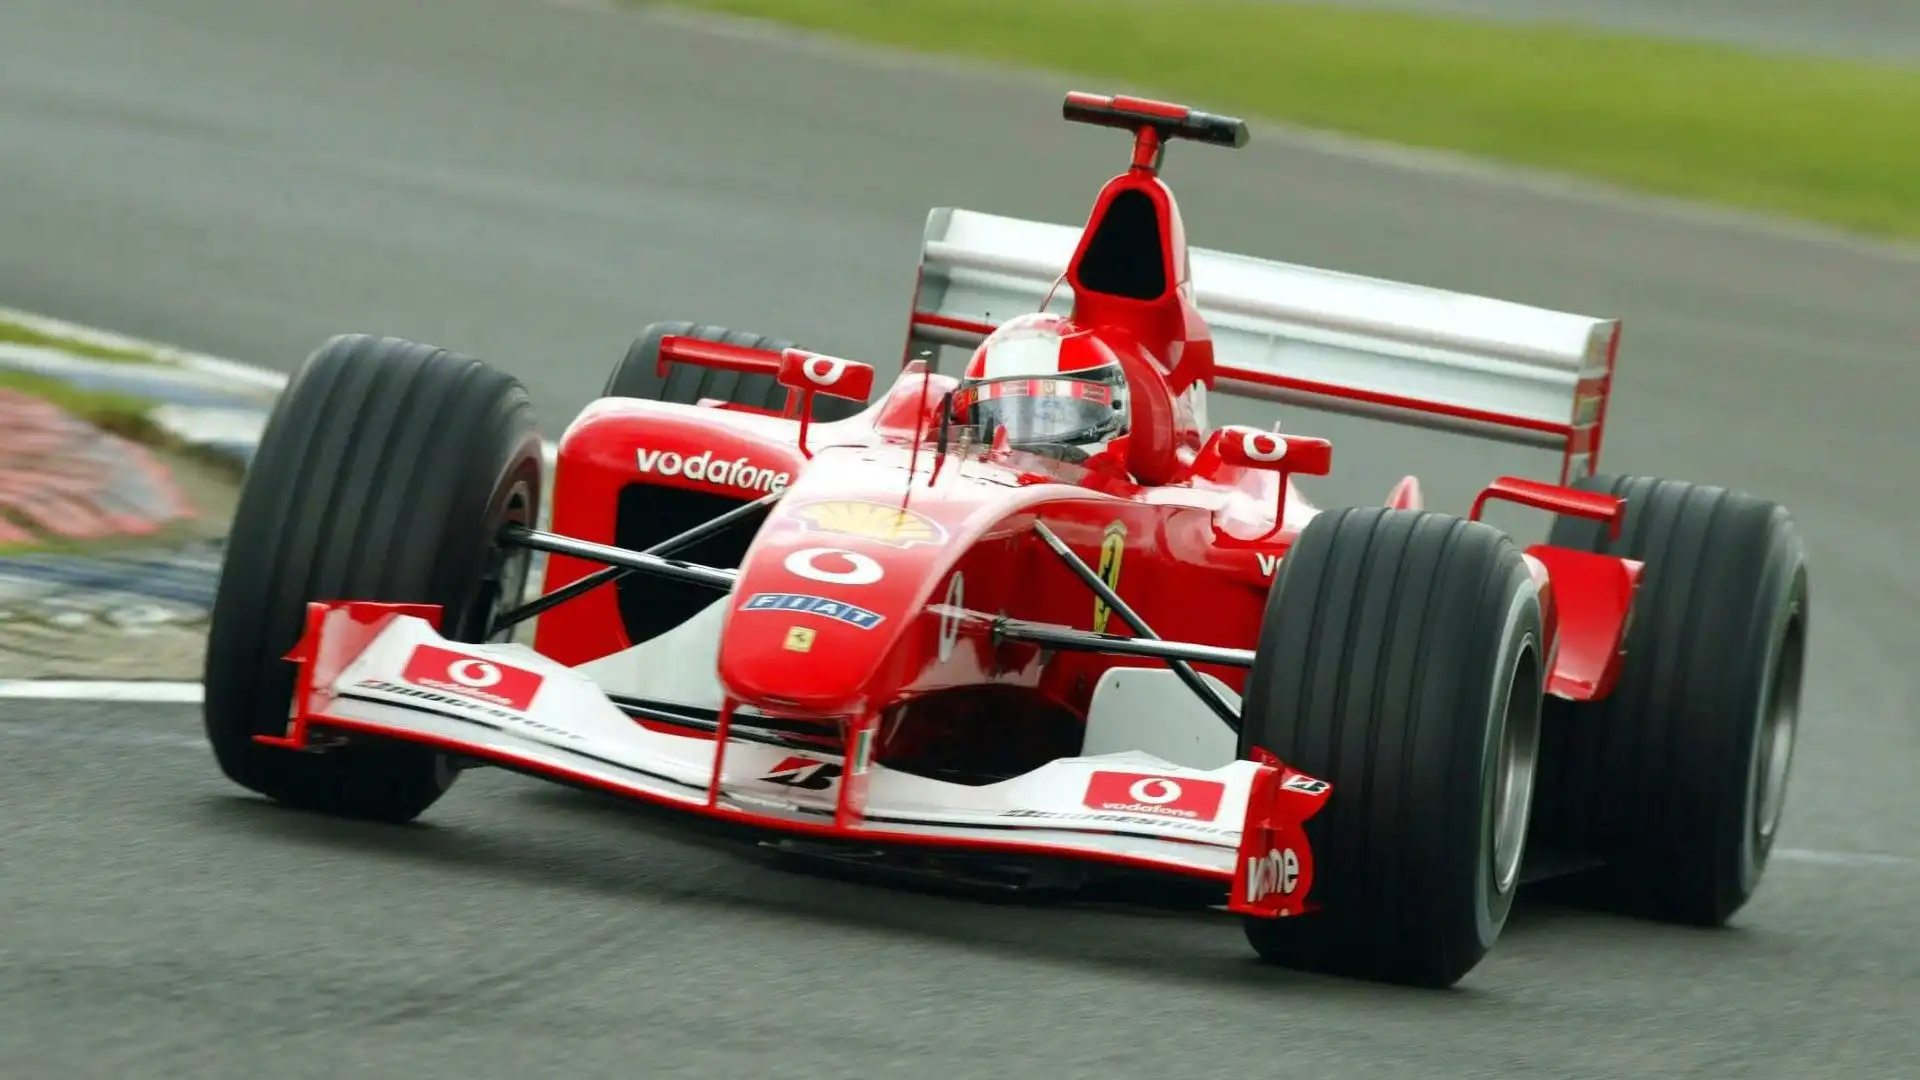 2- Michael Schumacher 68